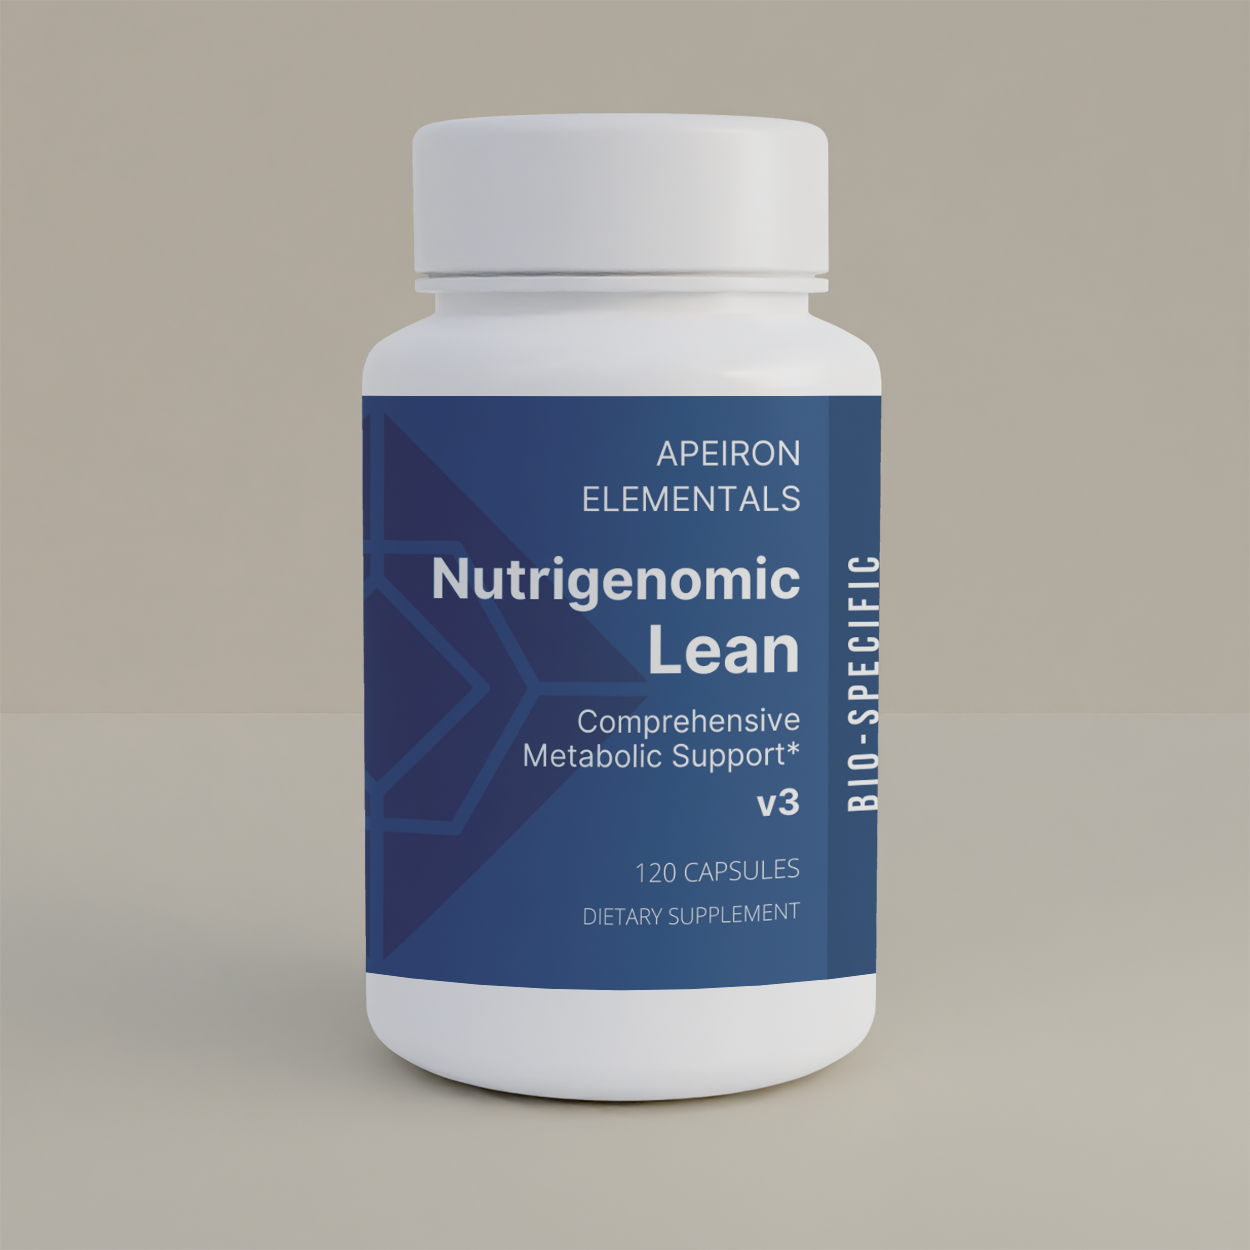 Staff: Nutrigenomic Lean